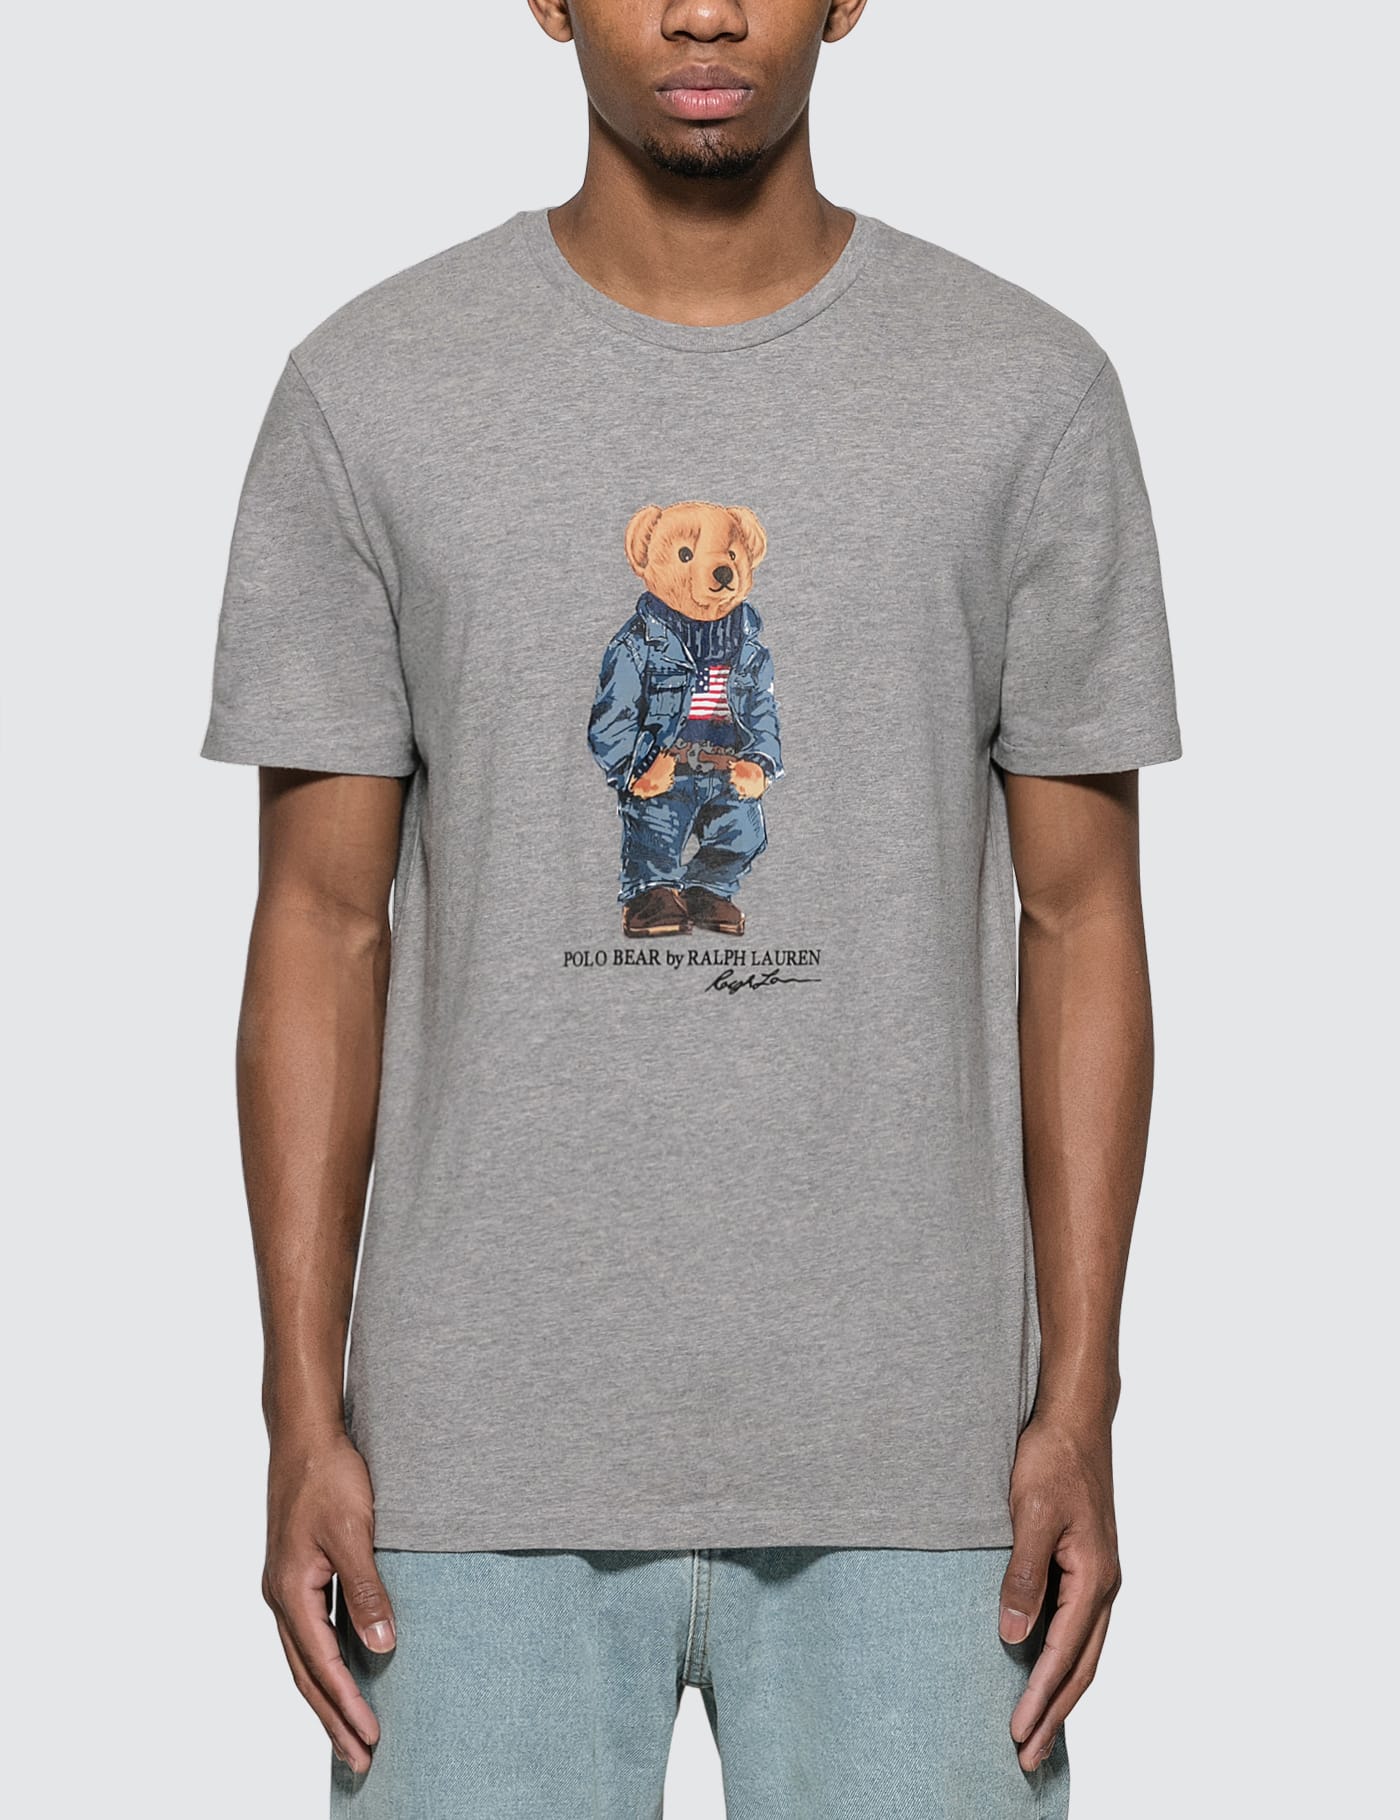 polo bear shirt mens